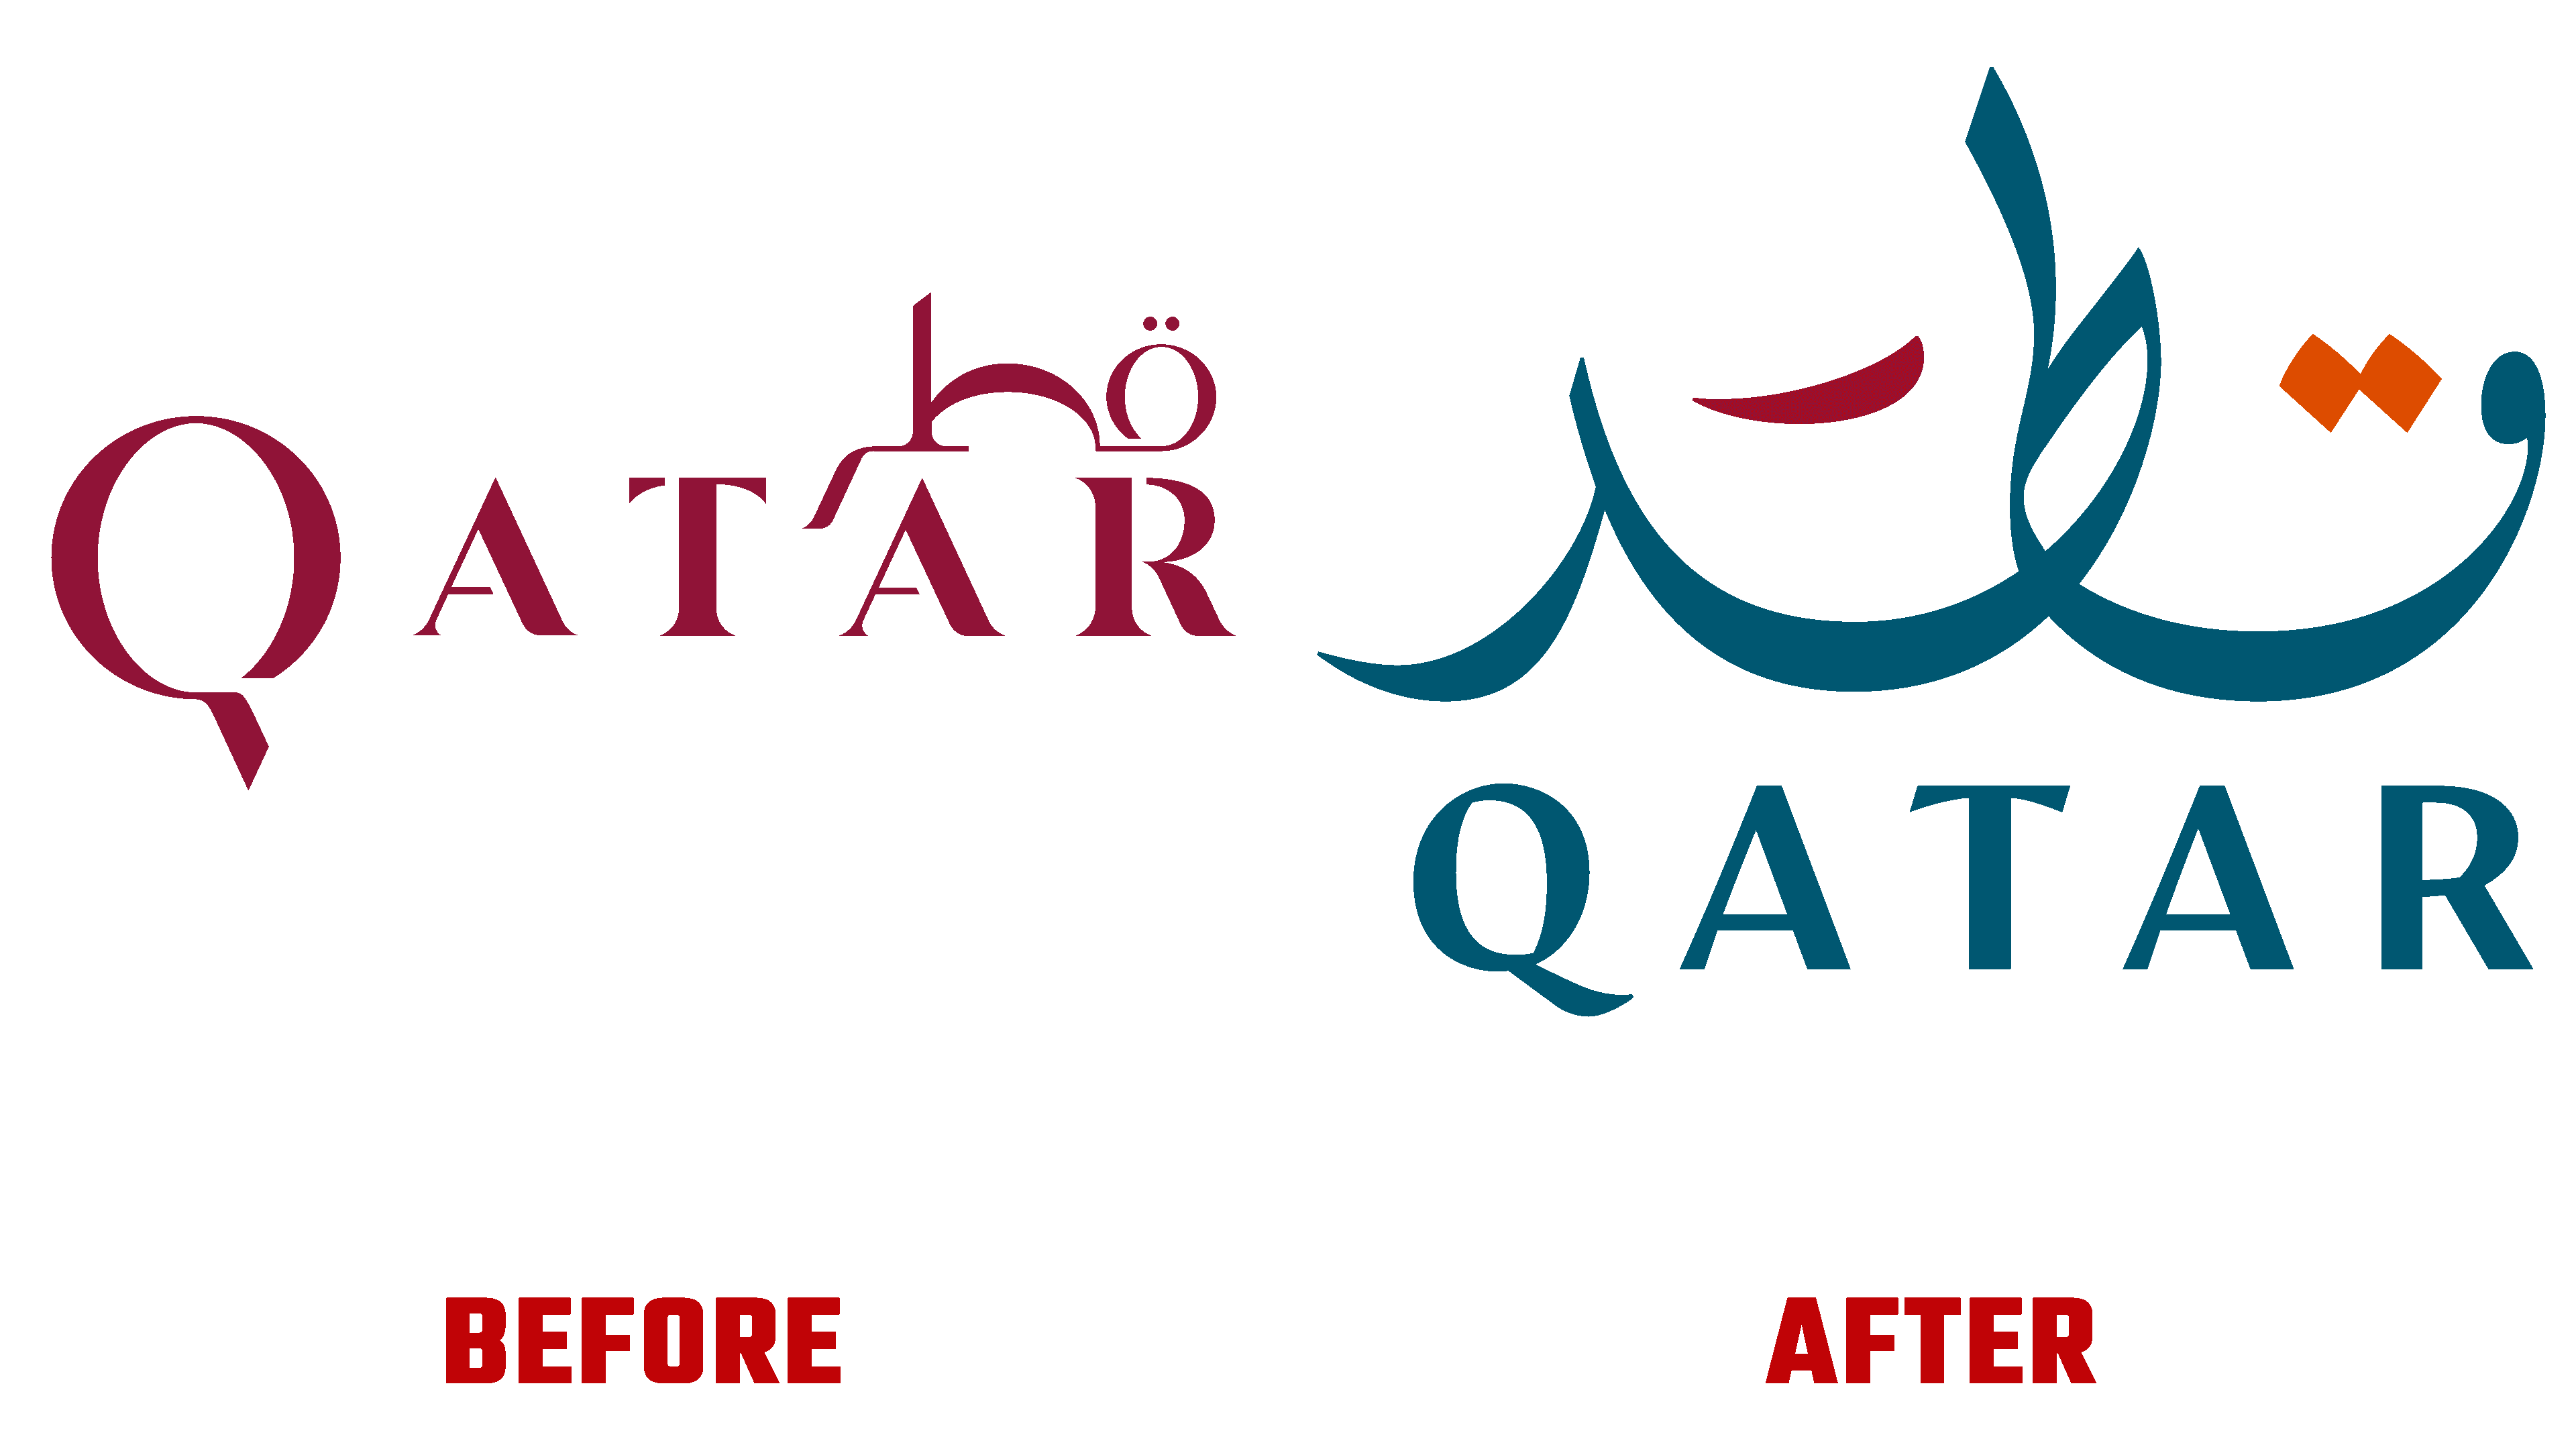 national tourism council qatar